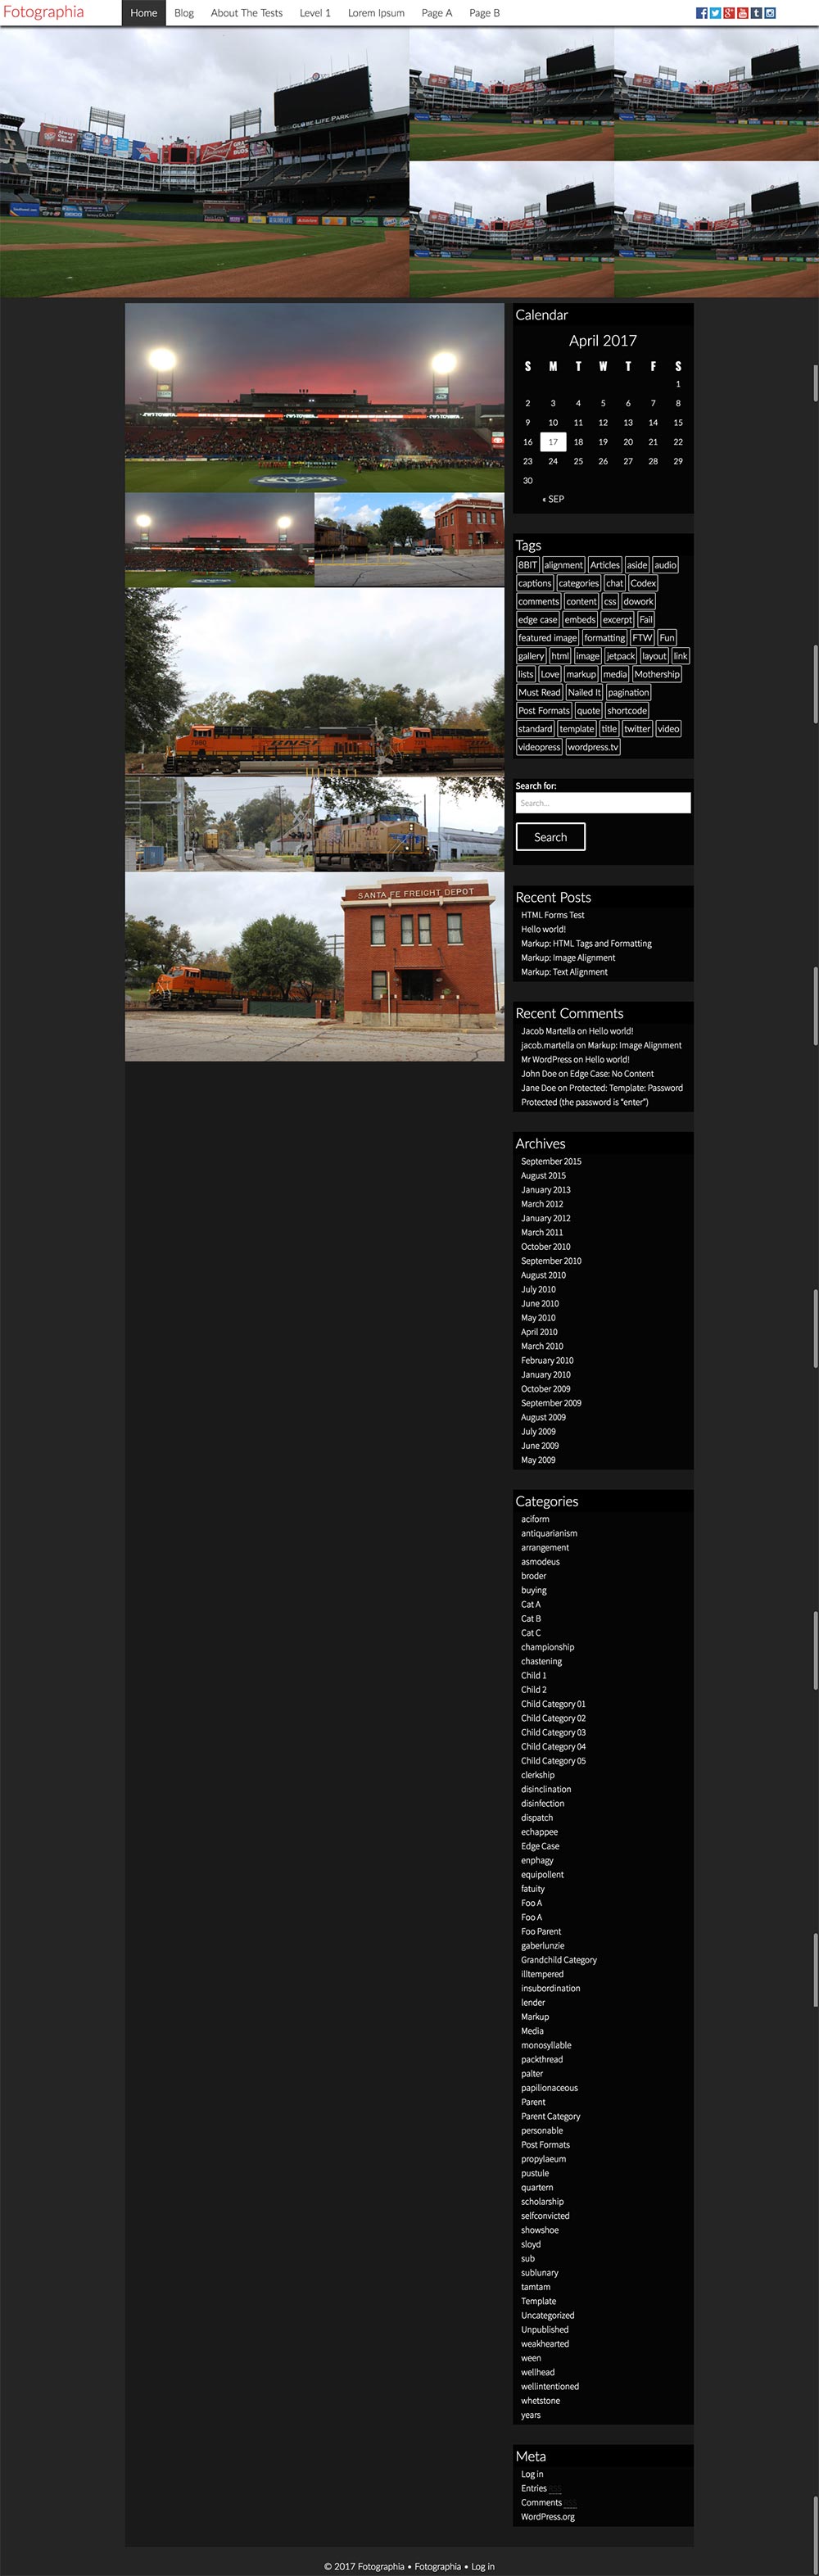 Homepage for the Fotographia WordPress theme